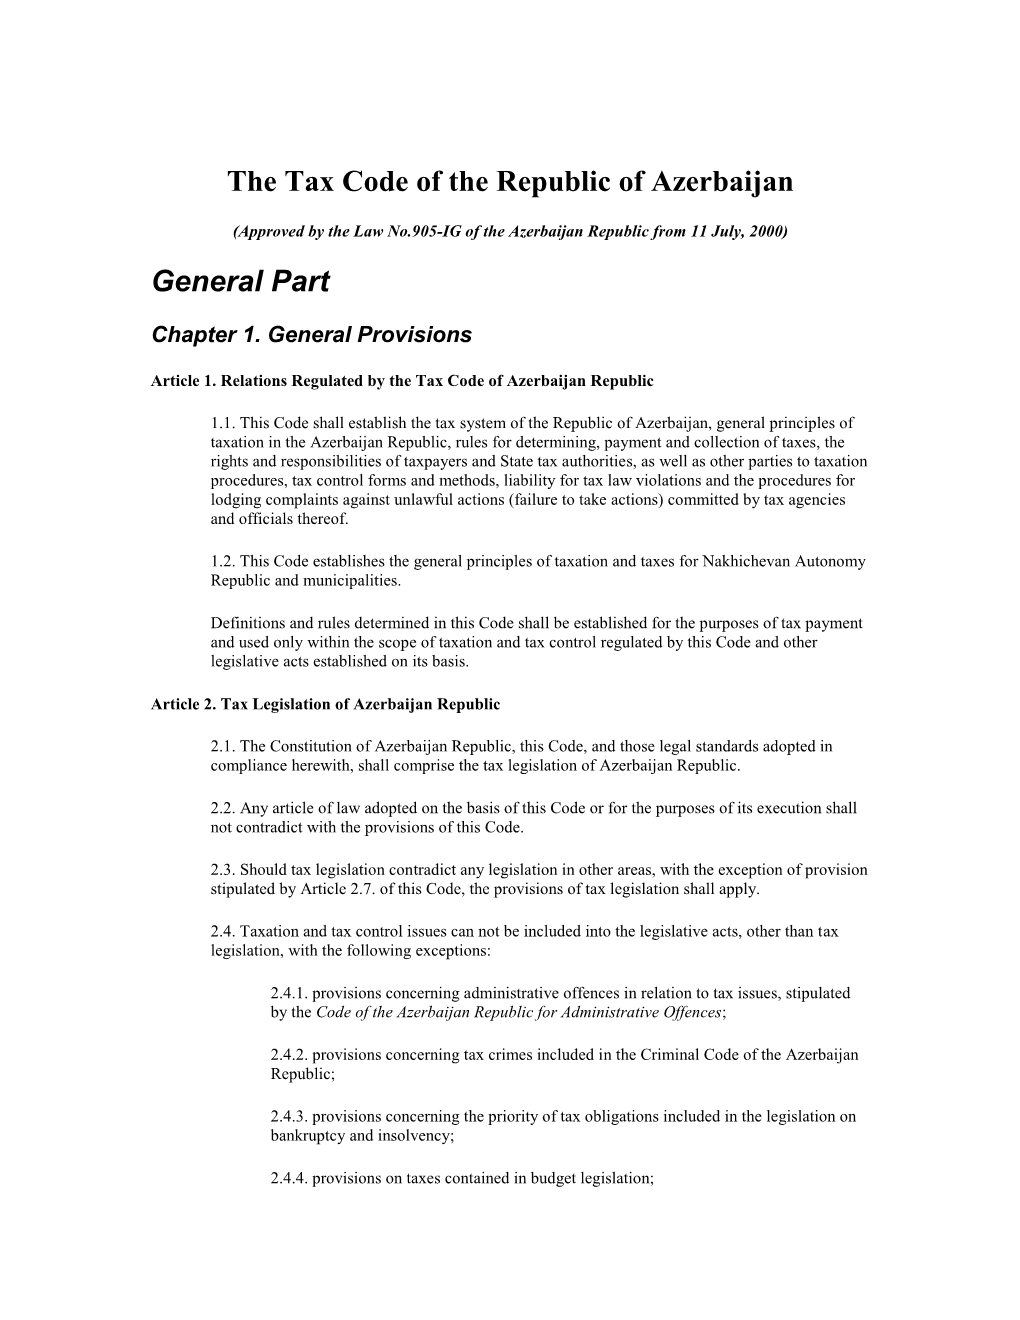 The Tax Code of the Republic of Azerbaijan General Part